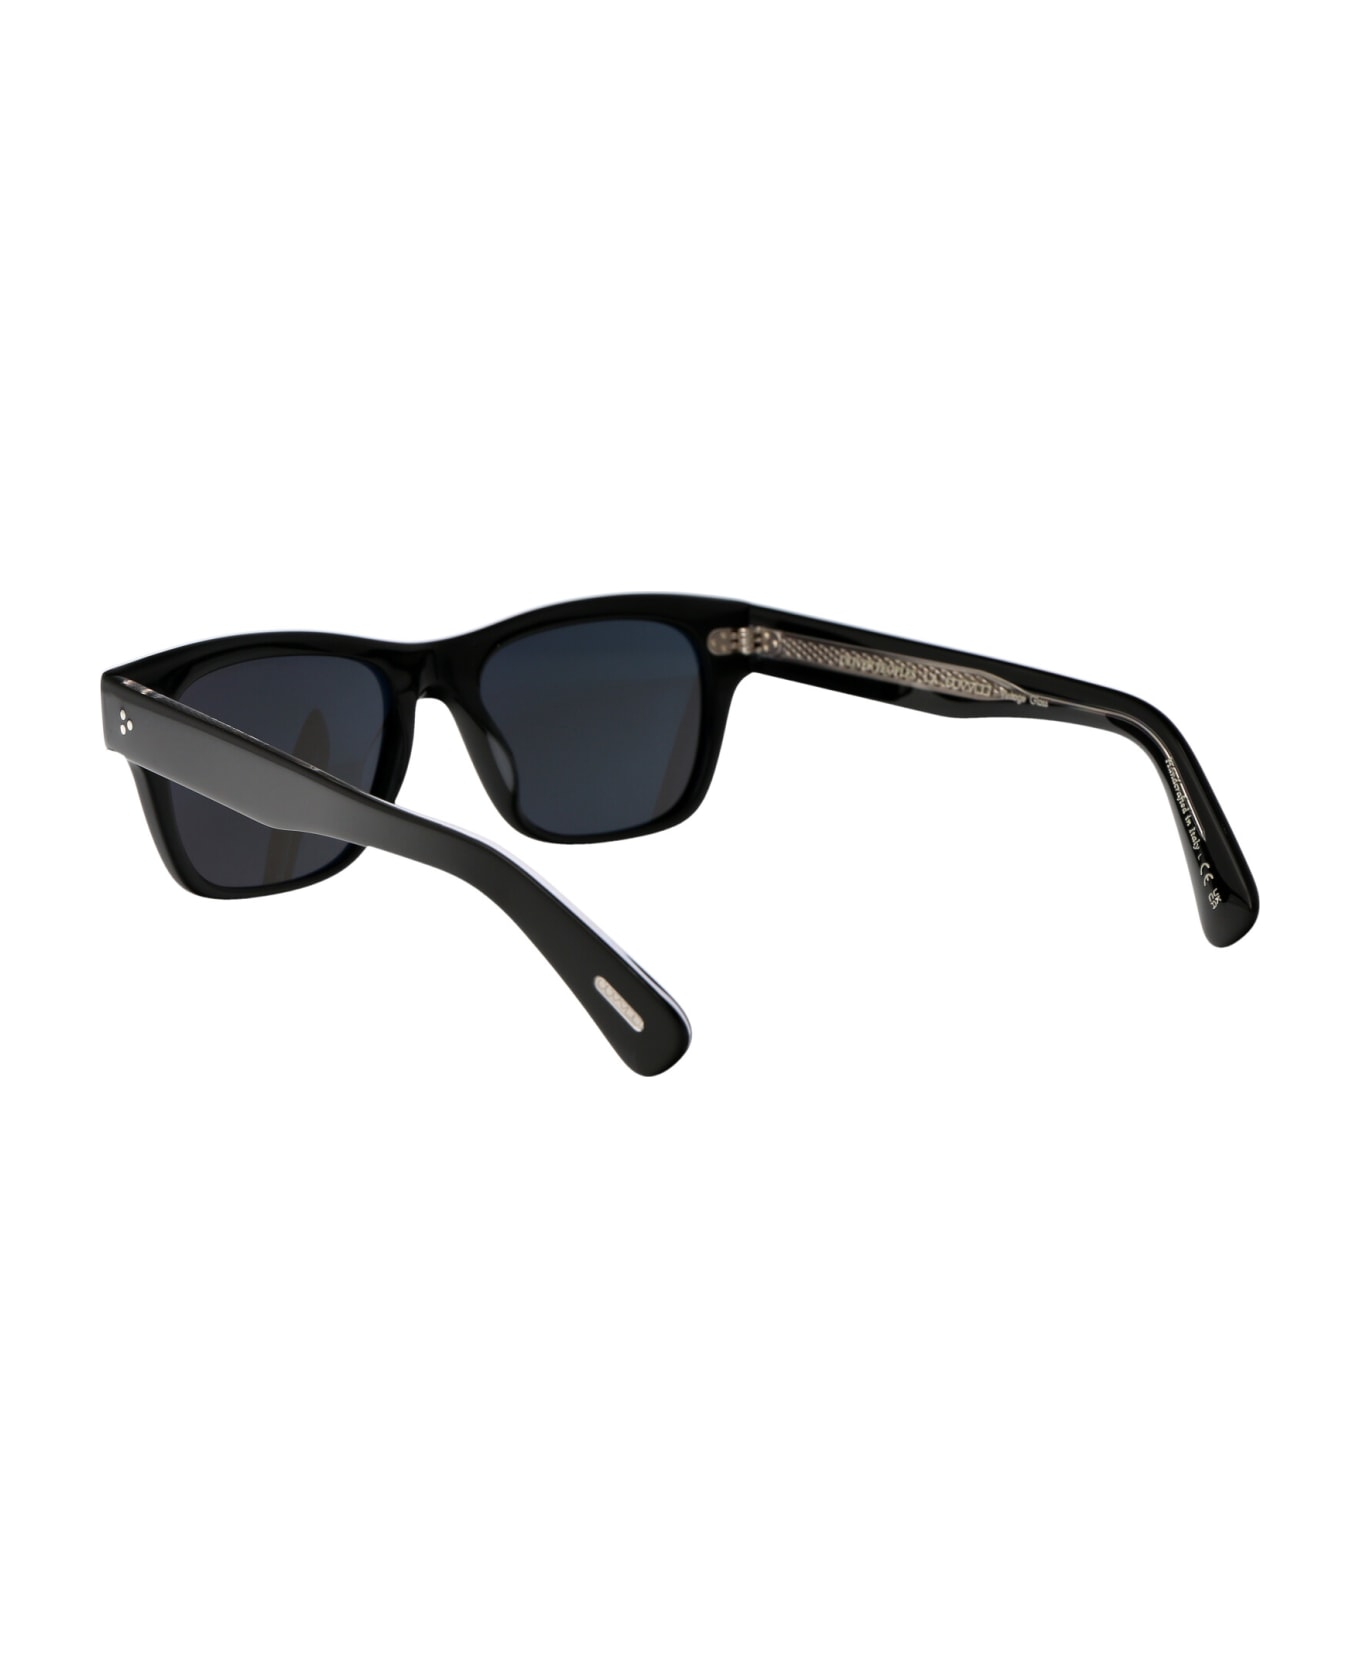 Oliver Peoples Birell Sun Sunglasses - 1492R5 Black